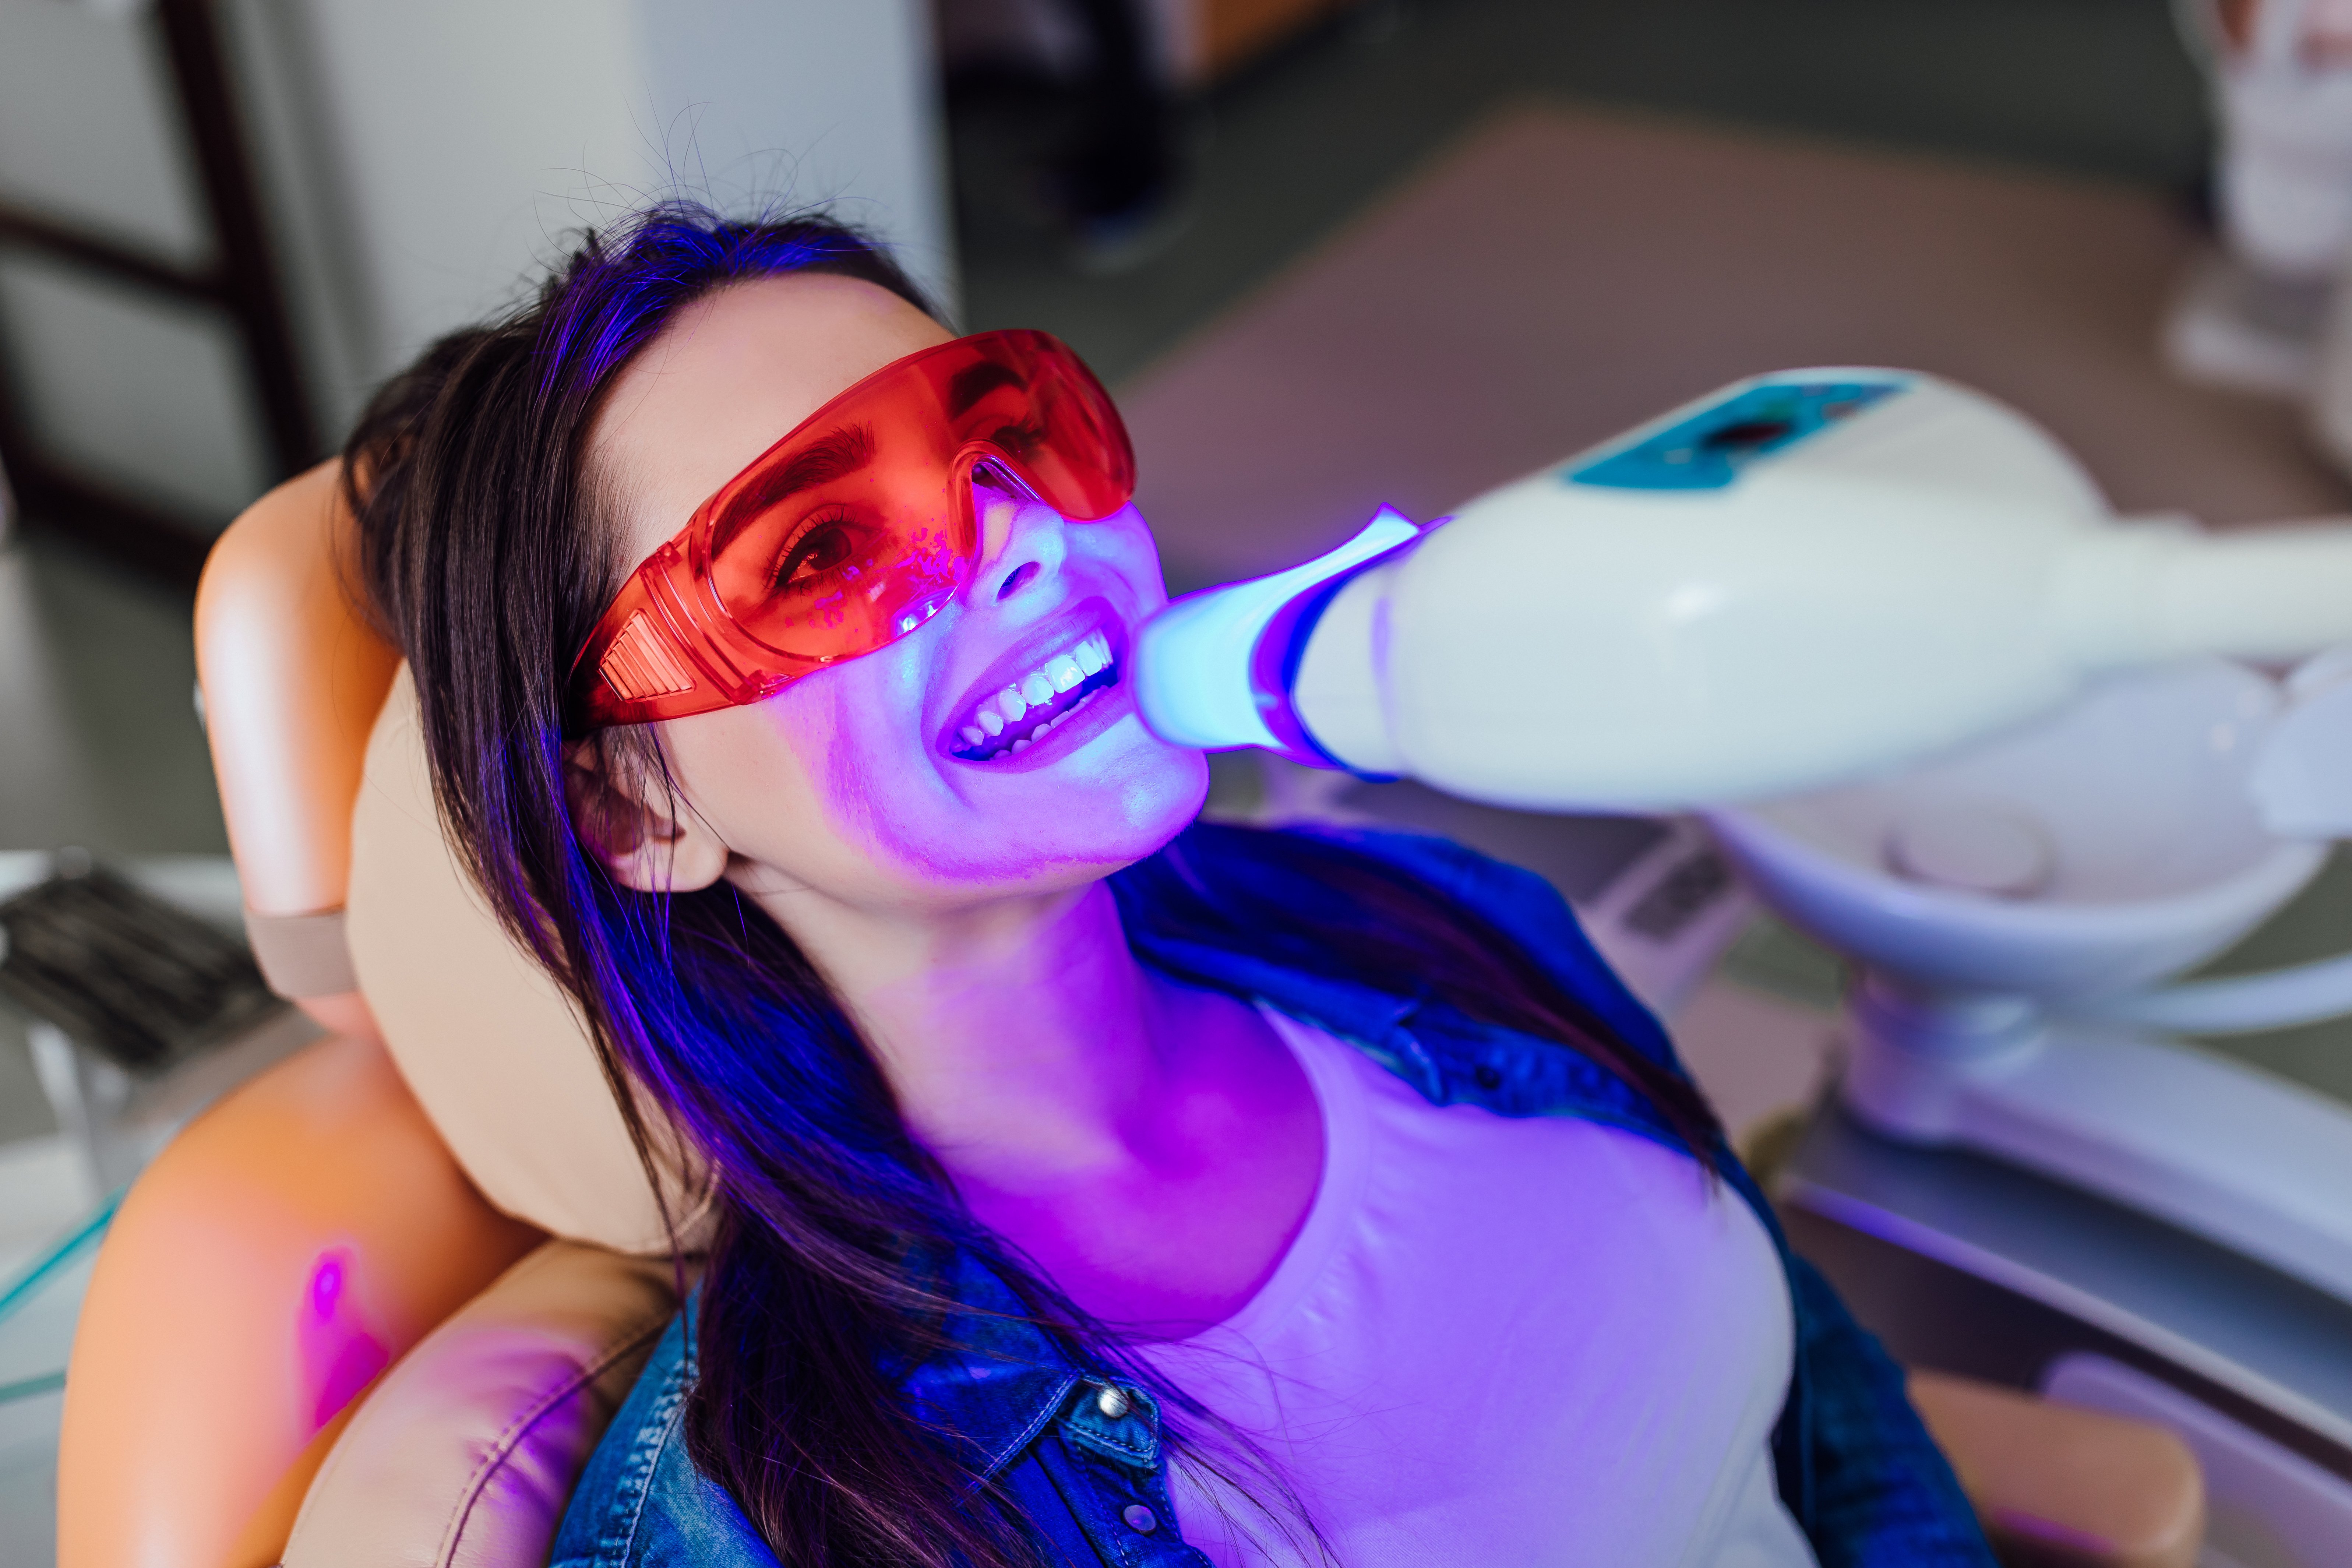 konsensus reparere efterår Is UV Light Teeth Whitening Safe and Effective?